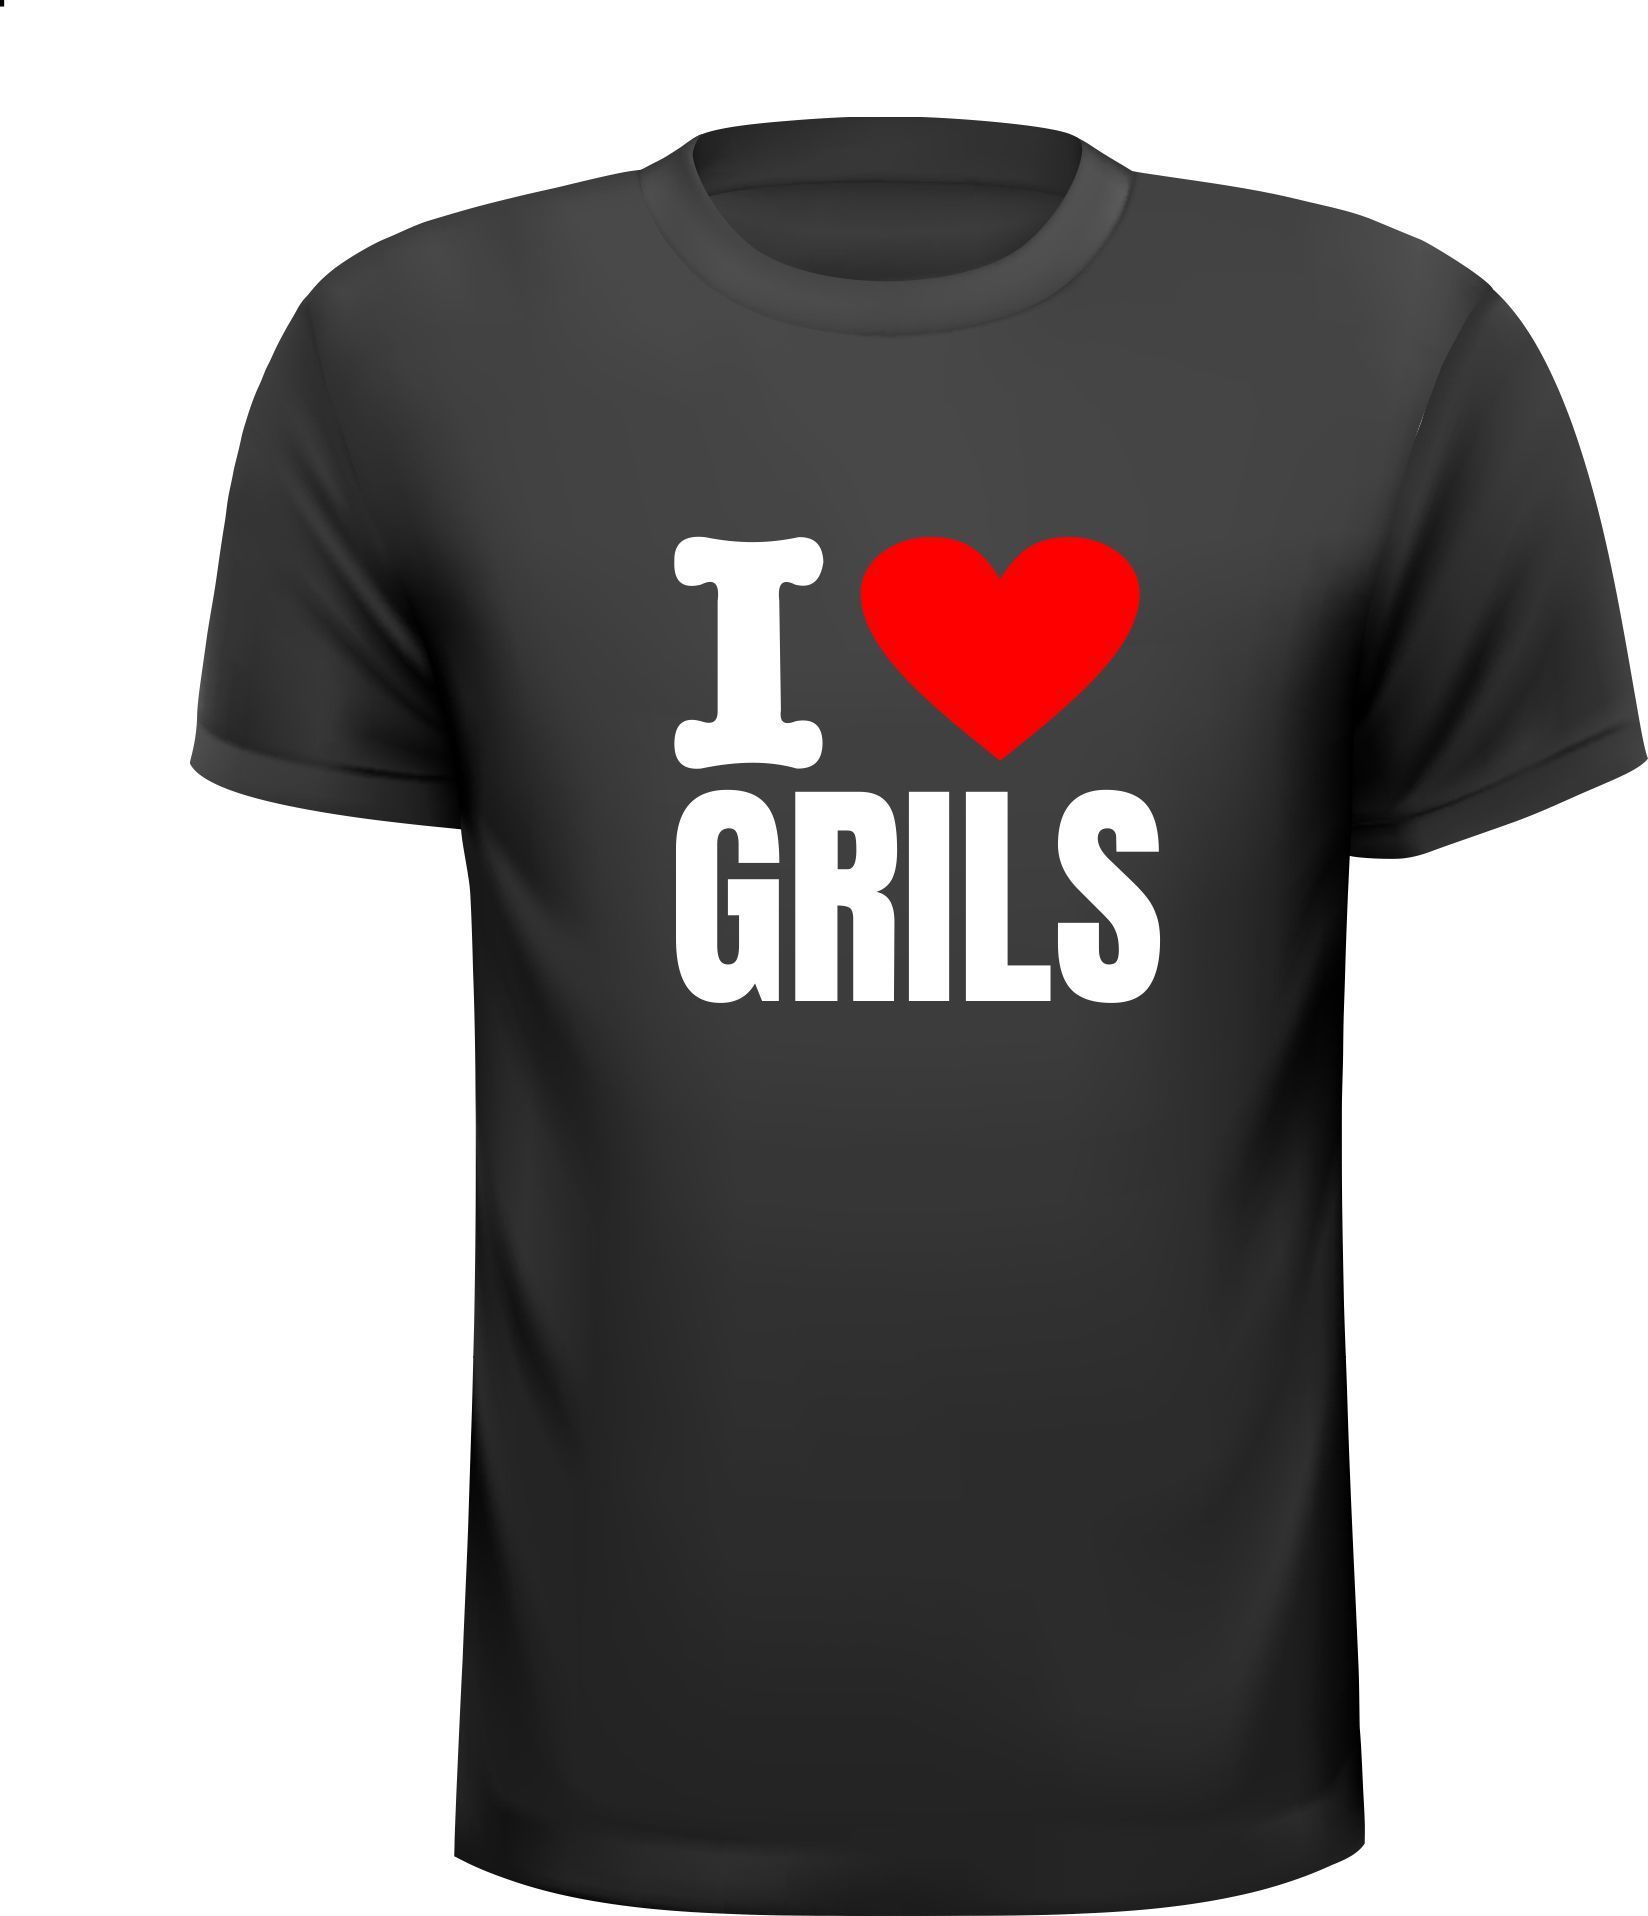 T-shirt i love girls